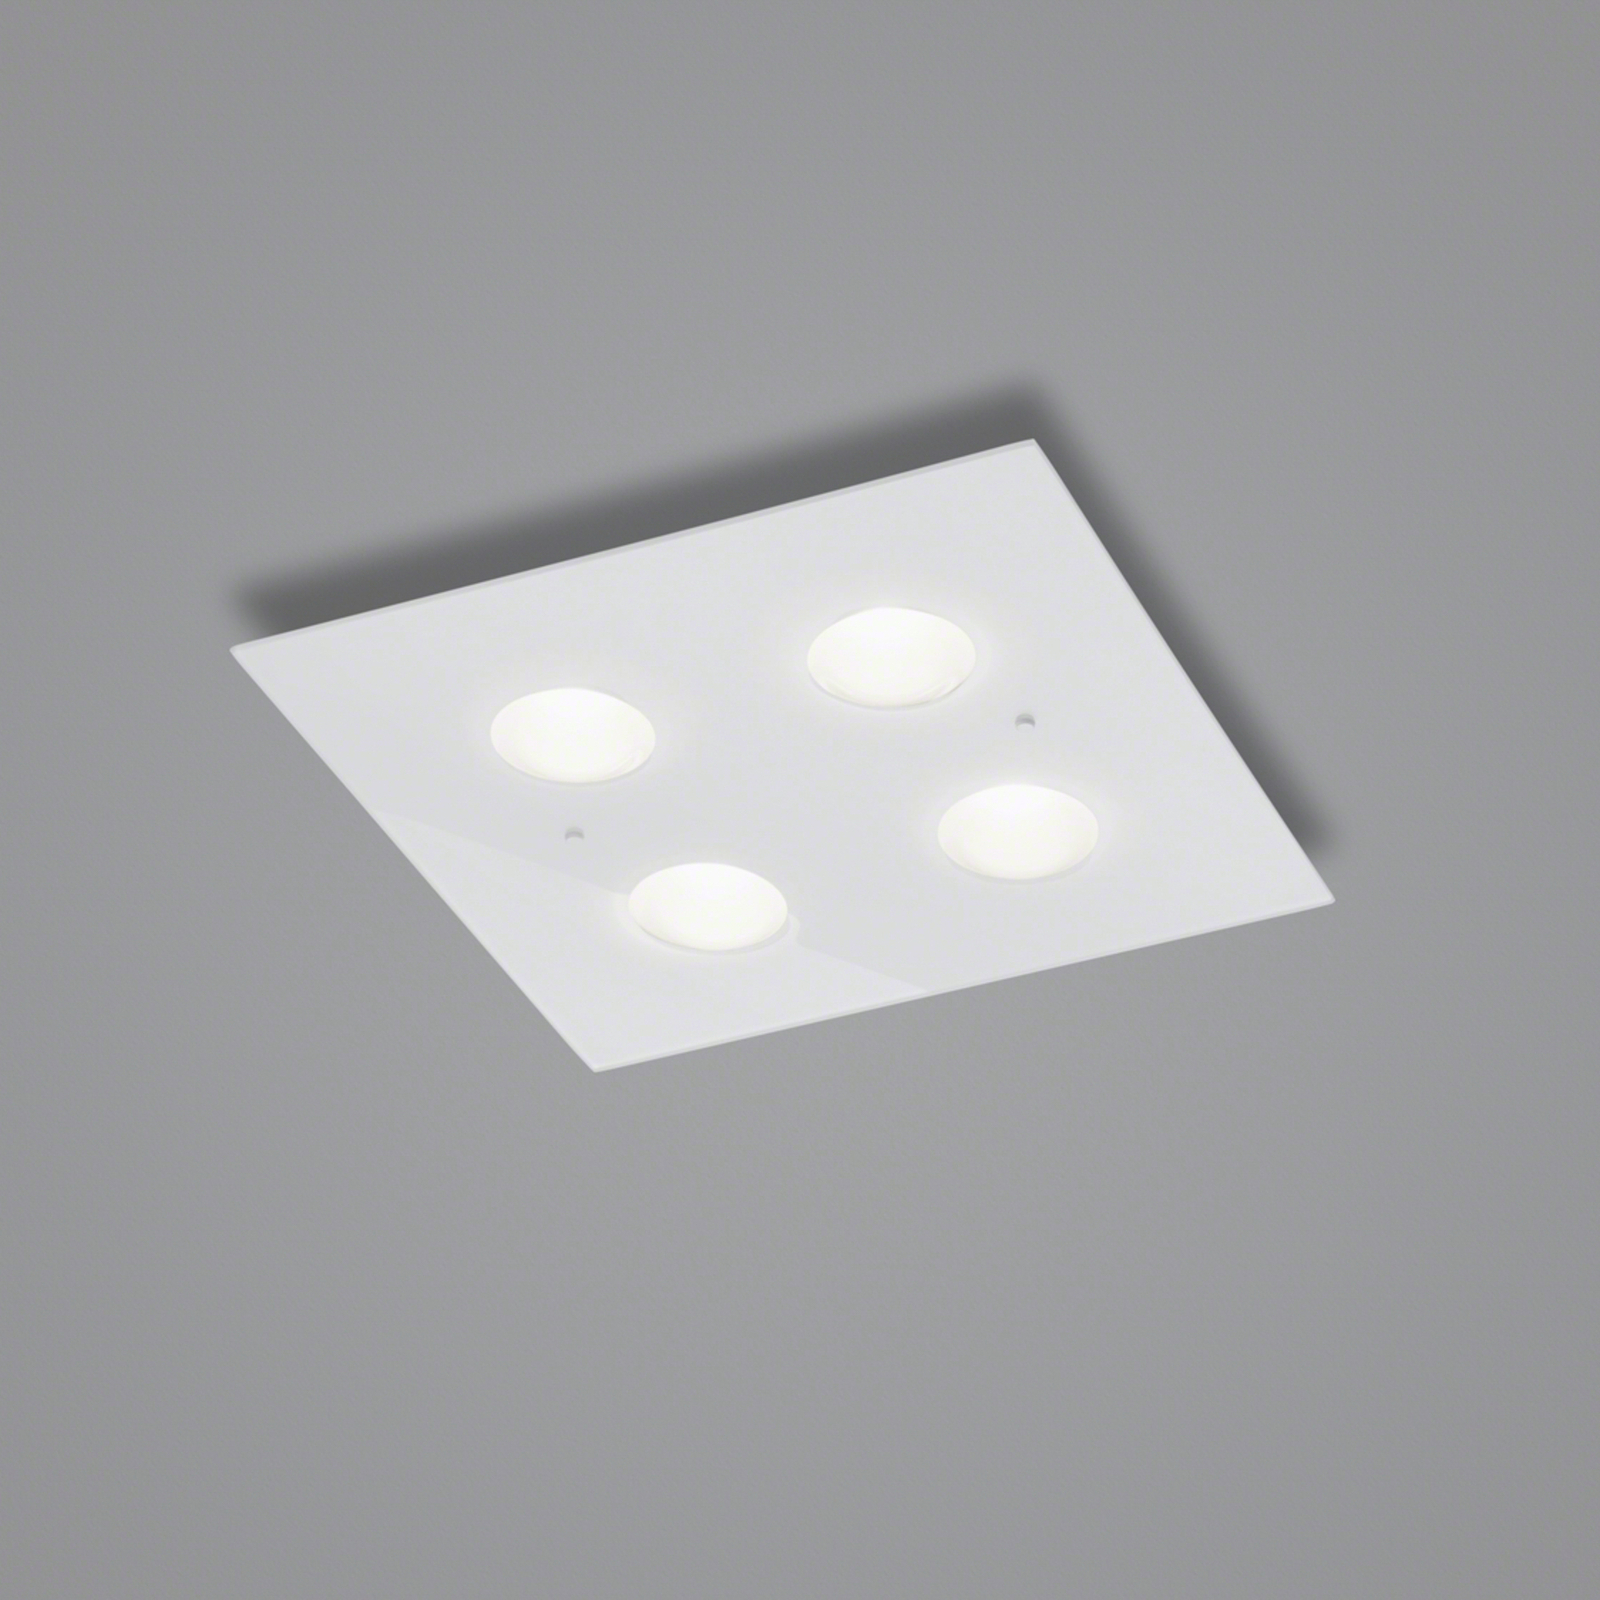 Helestra Nomi LED plafondlamp 38x38cm dim wit